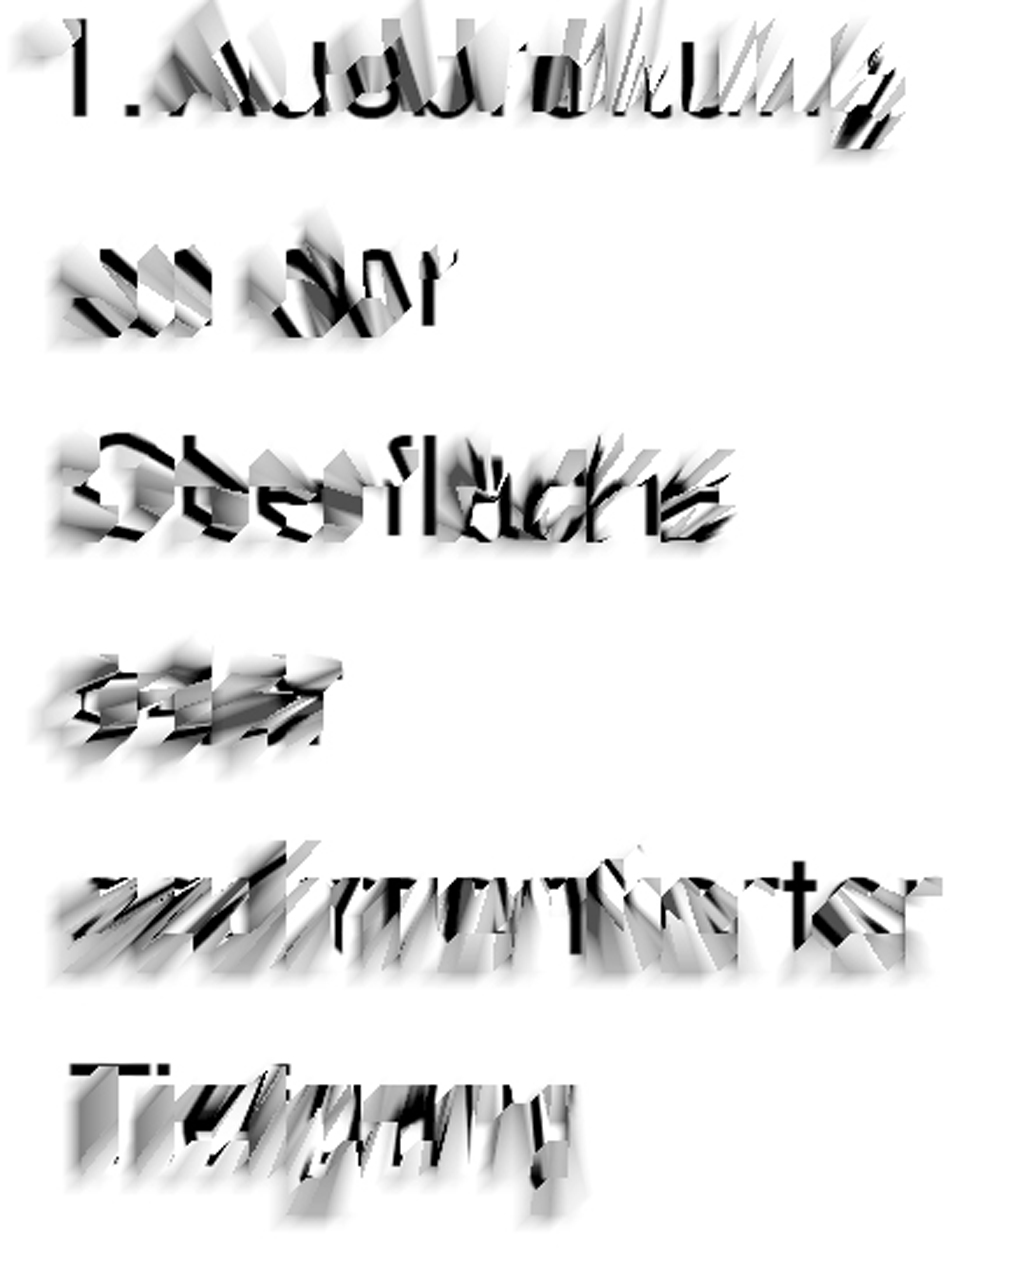 Urban-Manegold-There-is-no-Private-Privatleben-Privatsphäre-Rauminstallation-Experiment-Typographie-Portrait-Gesellschaft-Licht-Kunst-Transparent-LED-Madlight-SliderMultiplex_typographie